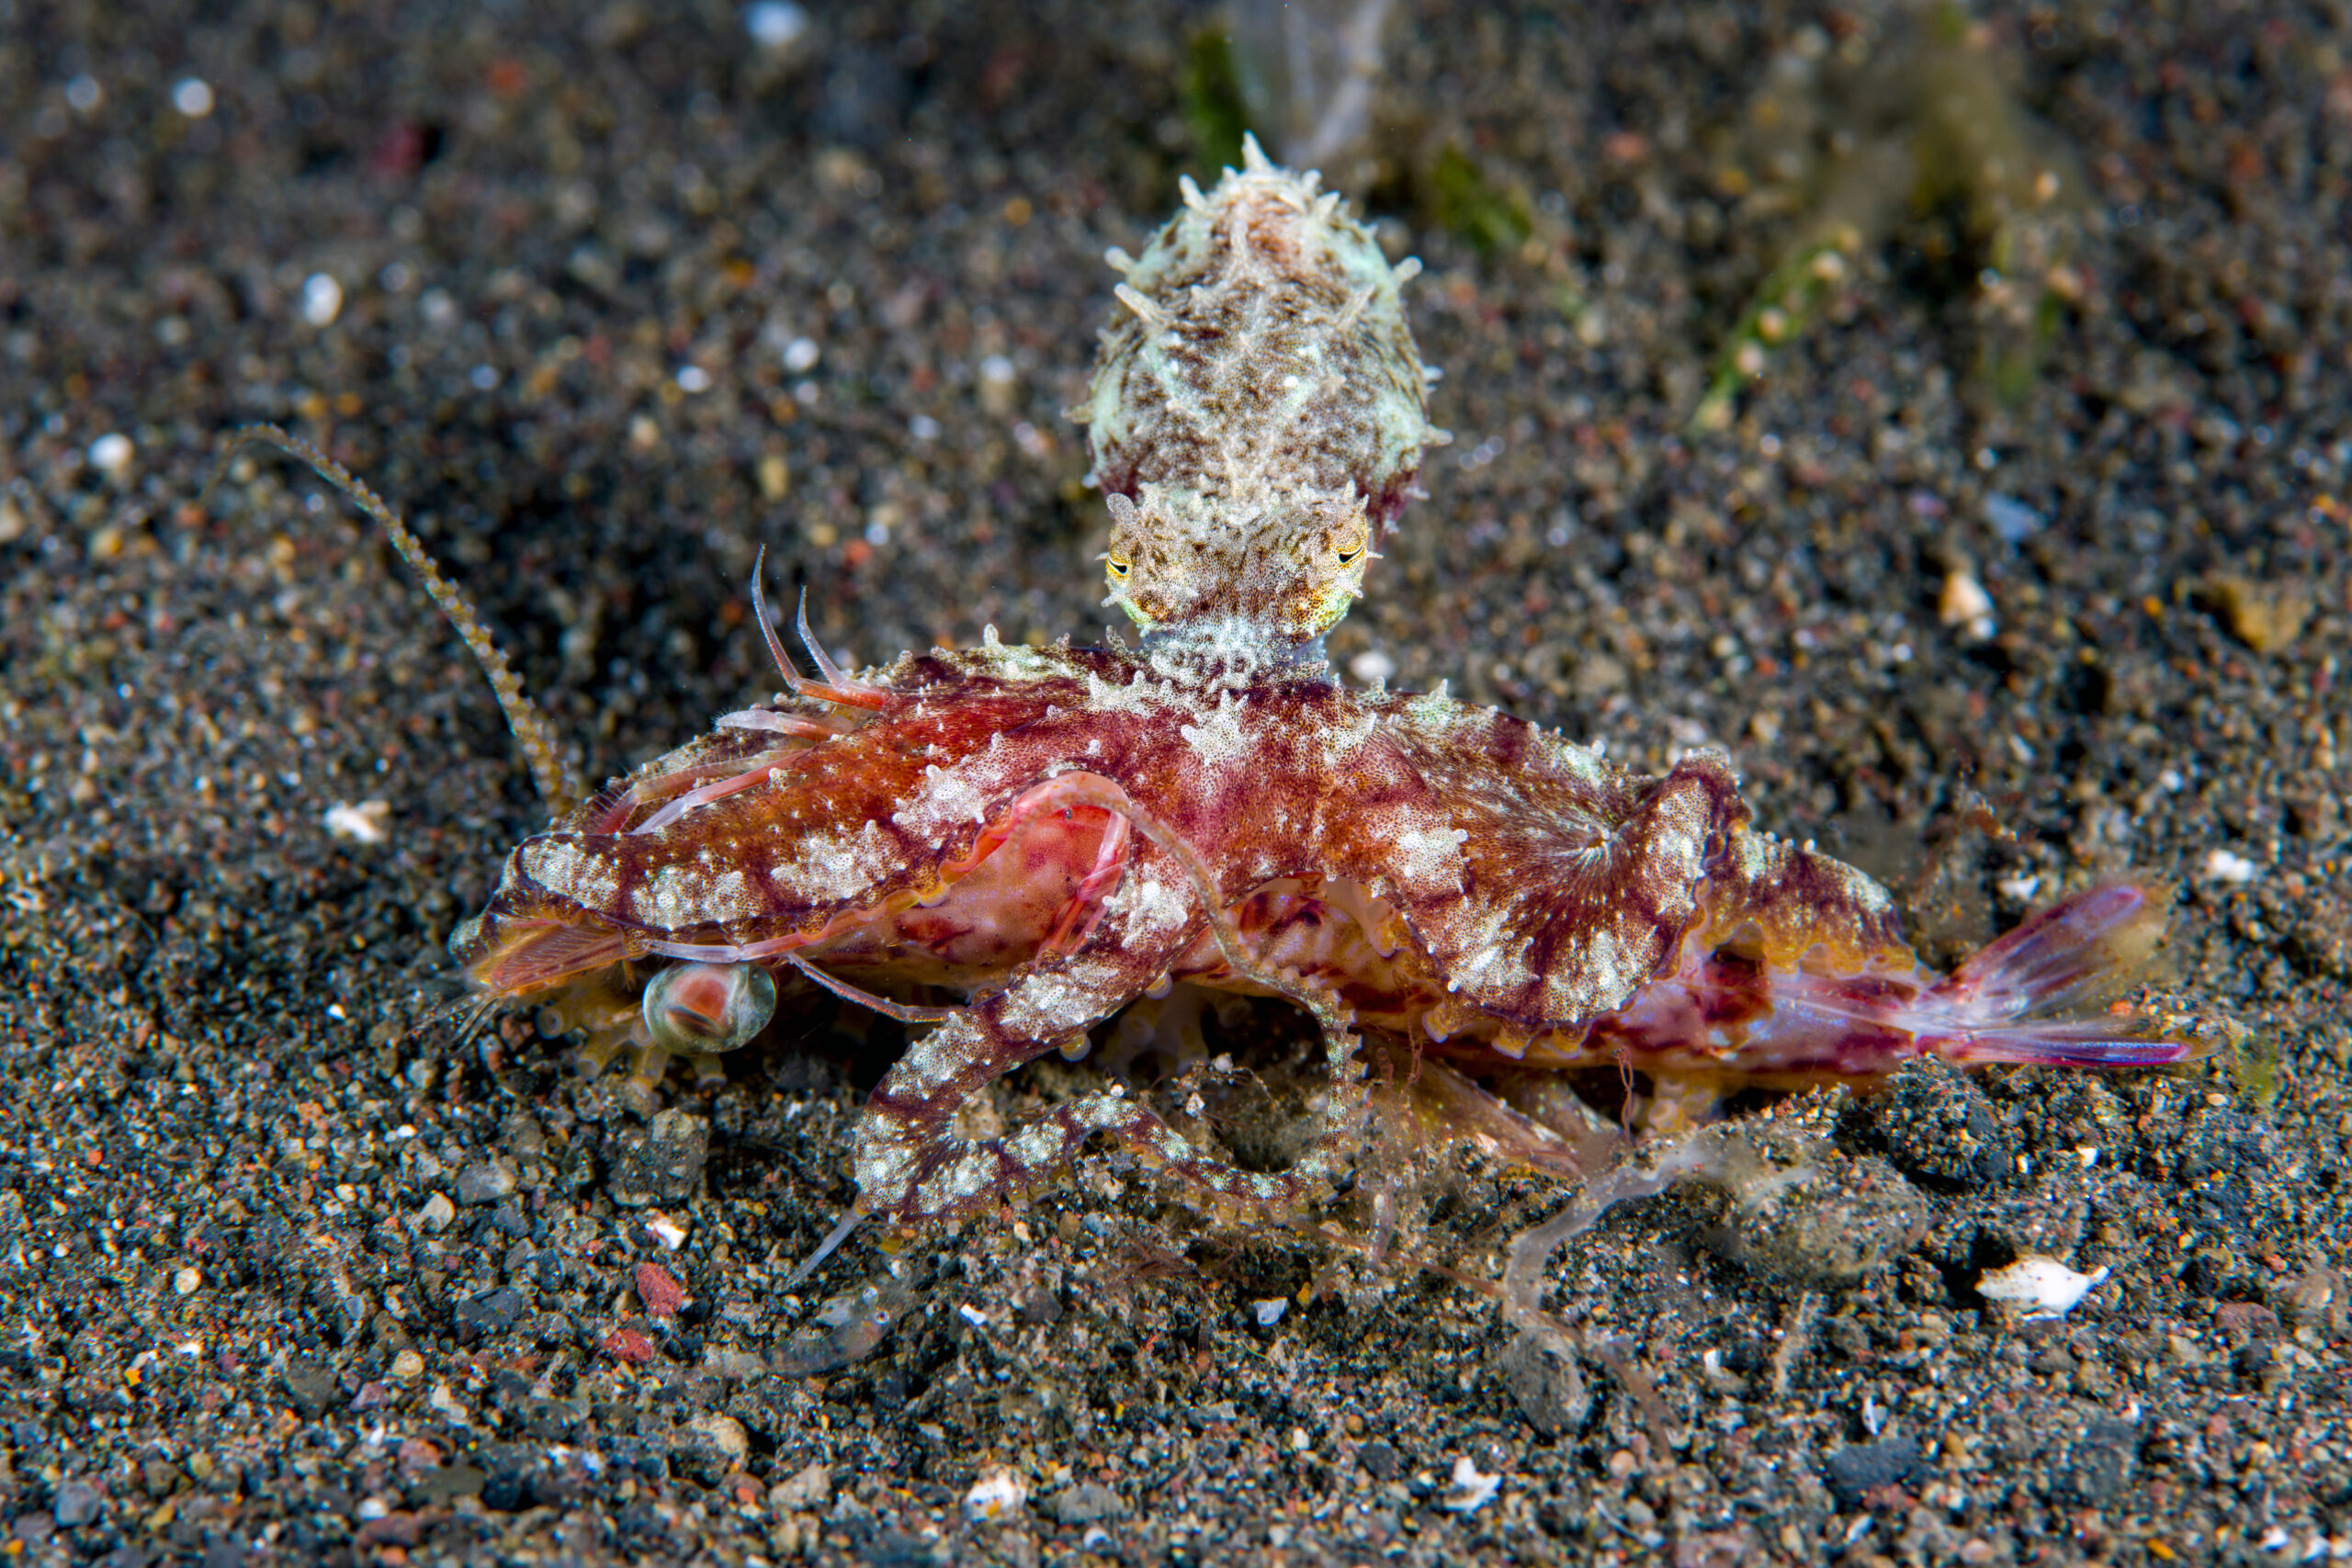 longed arm octopus eating shrimp